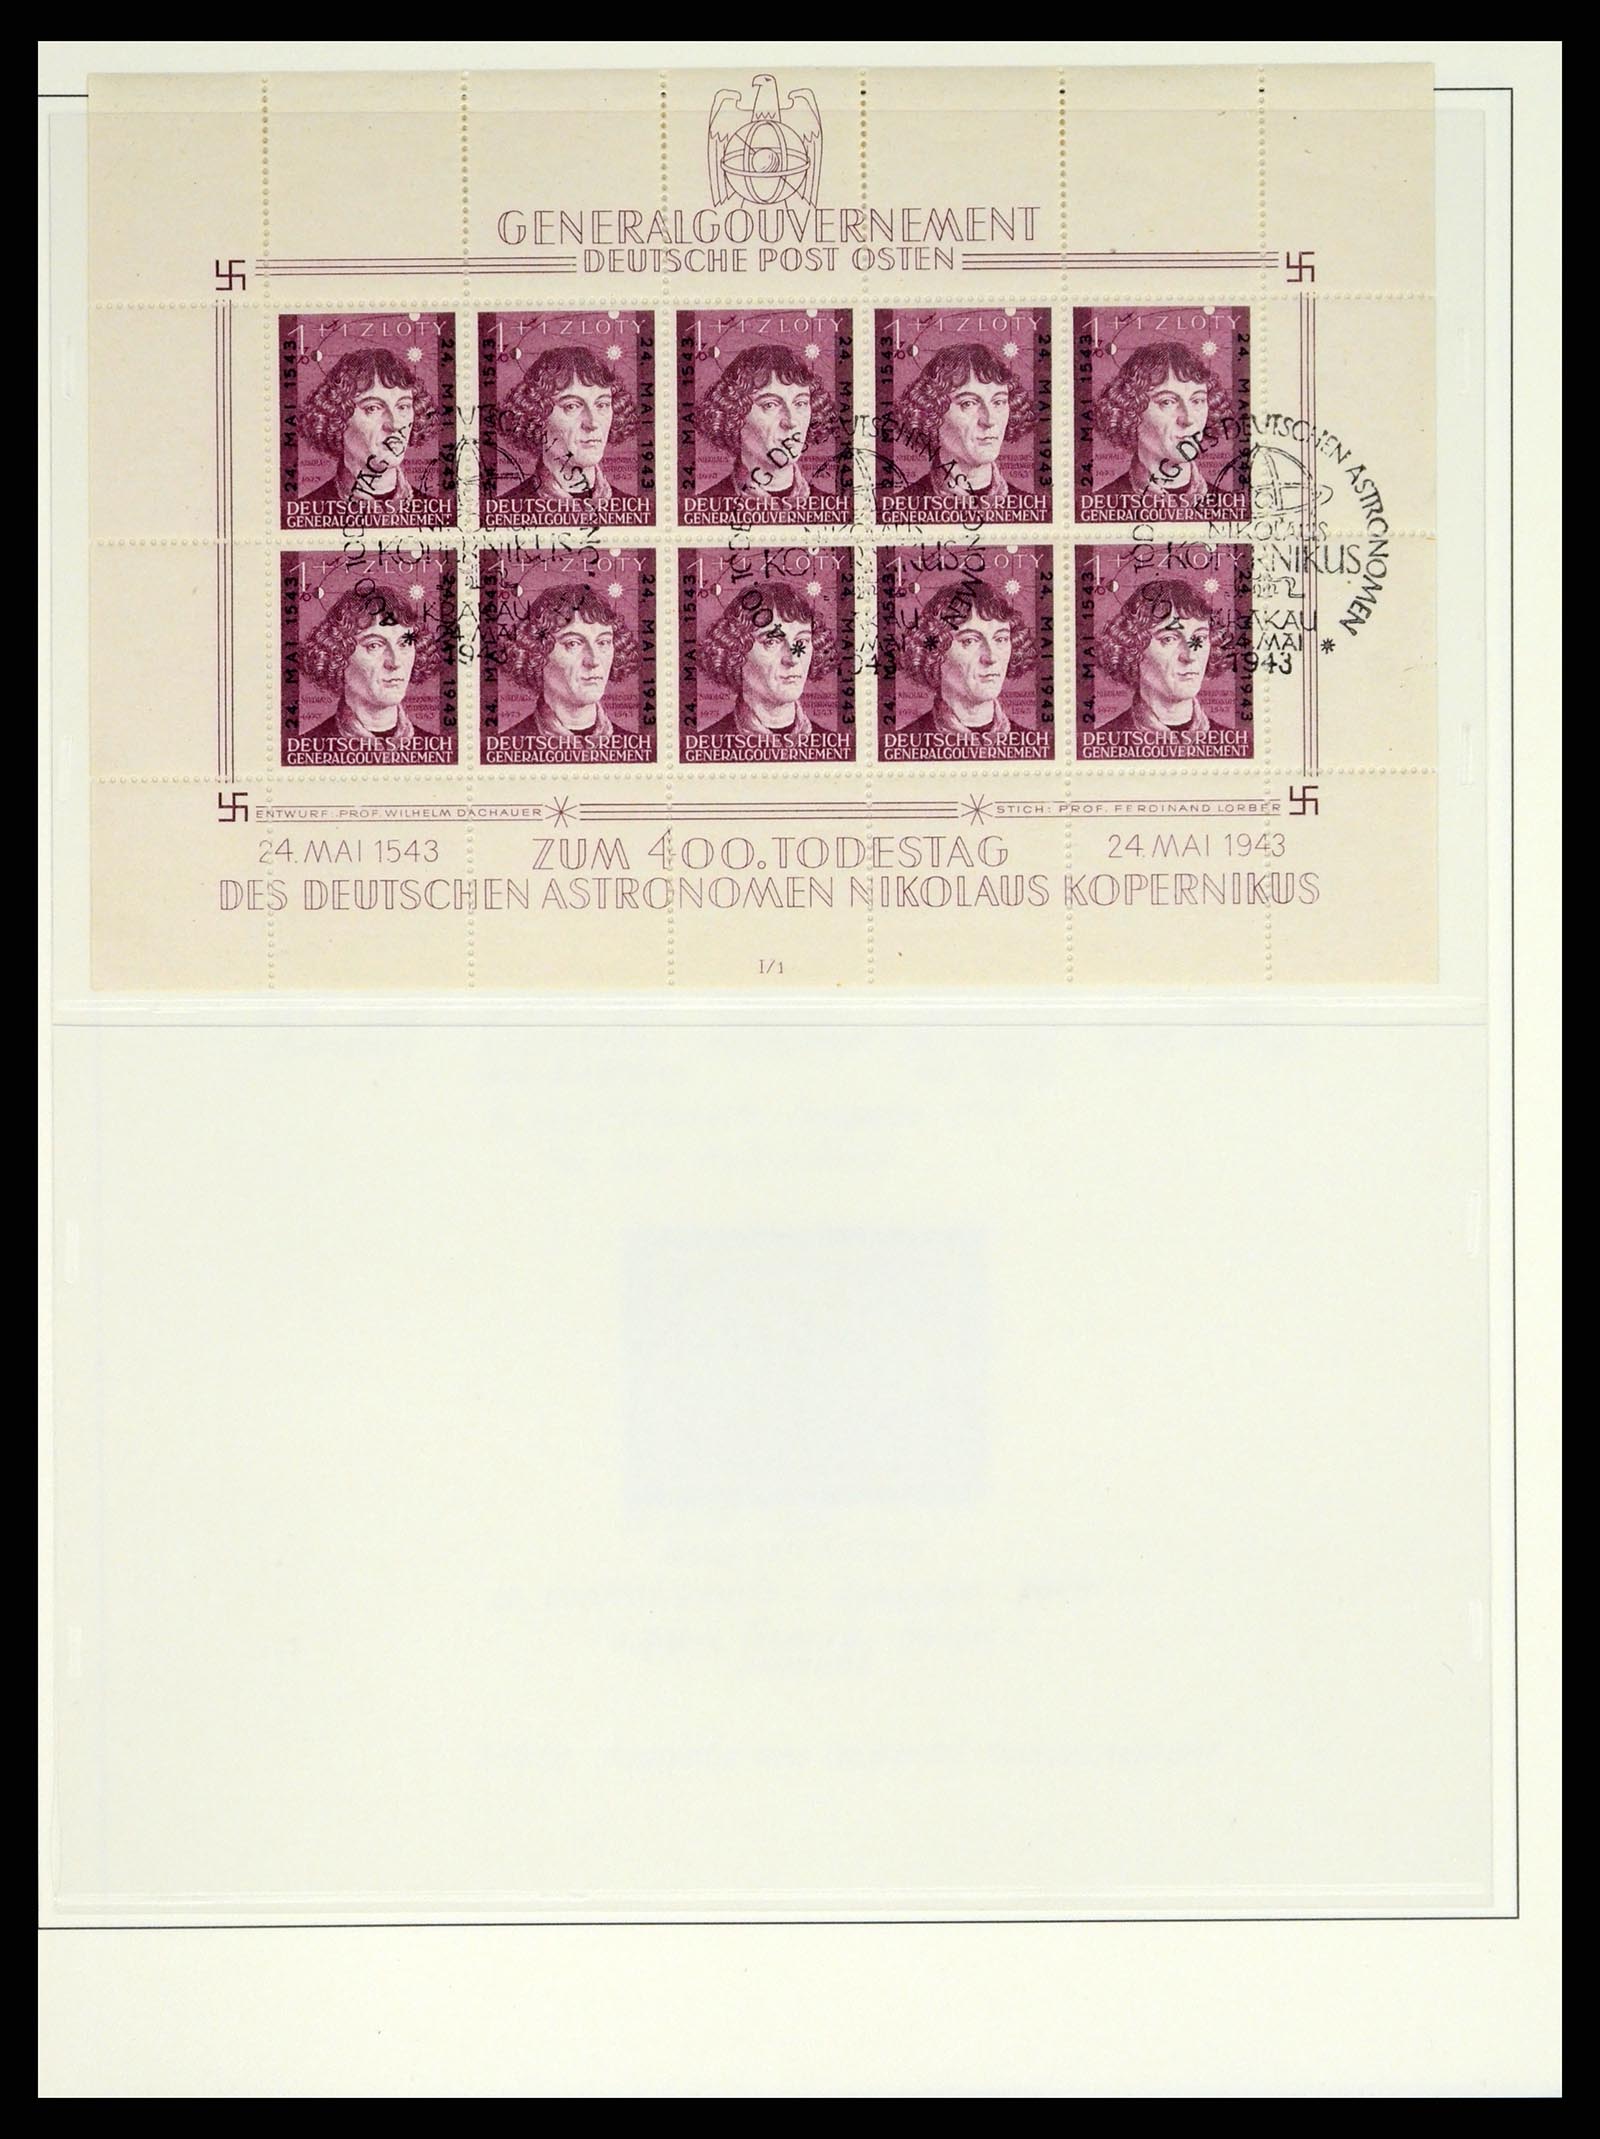 37535 174 - Stamp collection 37535 German occupation second worldwar 1939-1945.